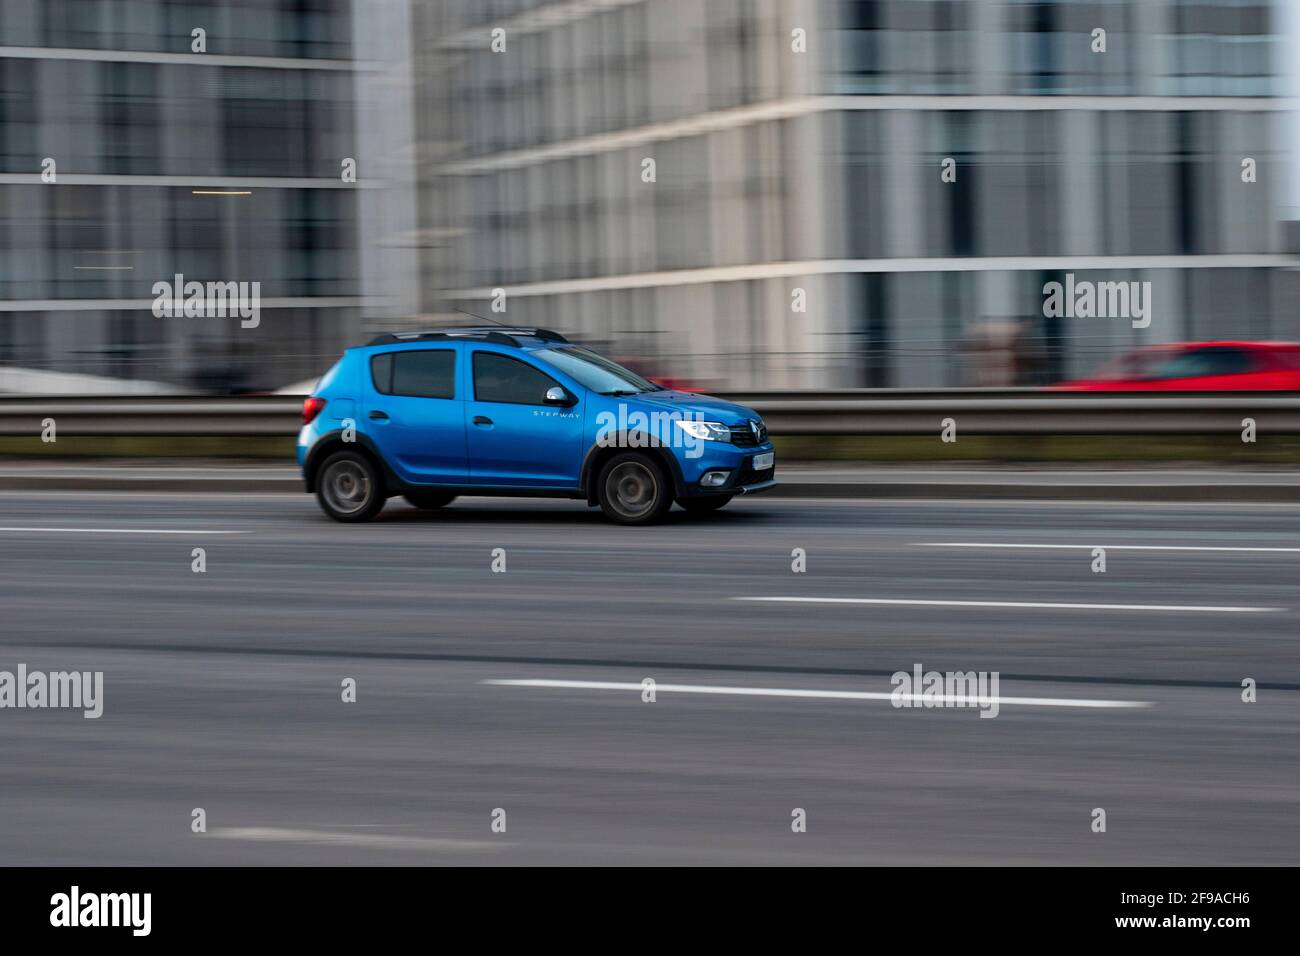 Ukraine, Kyiv - 11 March 2021: Light Blue Dacia Sandero car moving on the street. Editorial Stock Photo